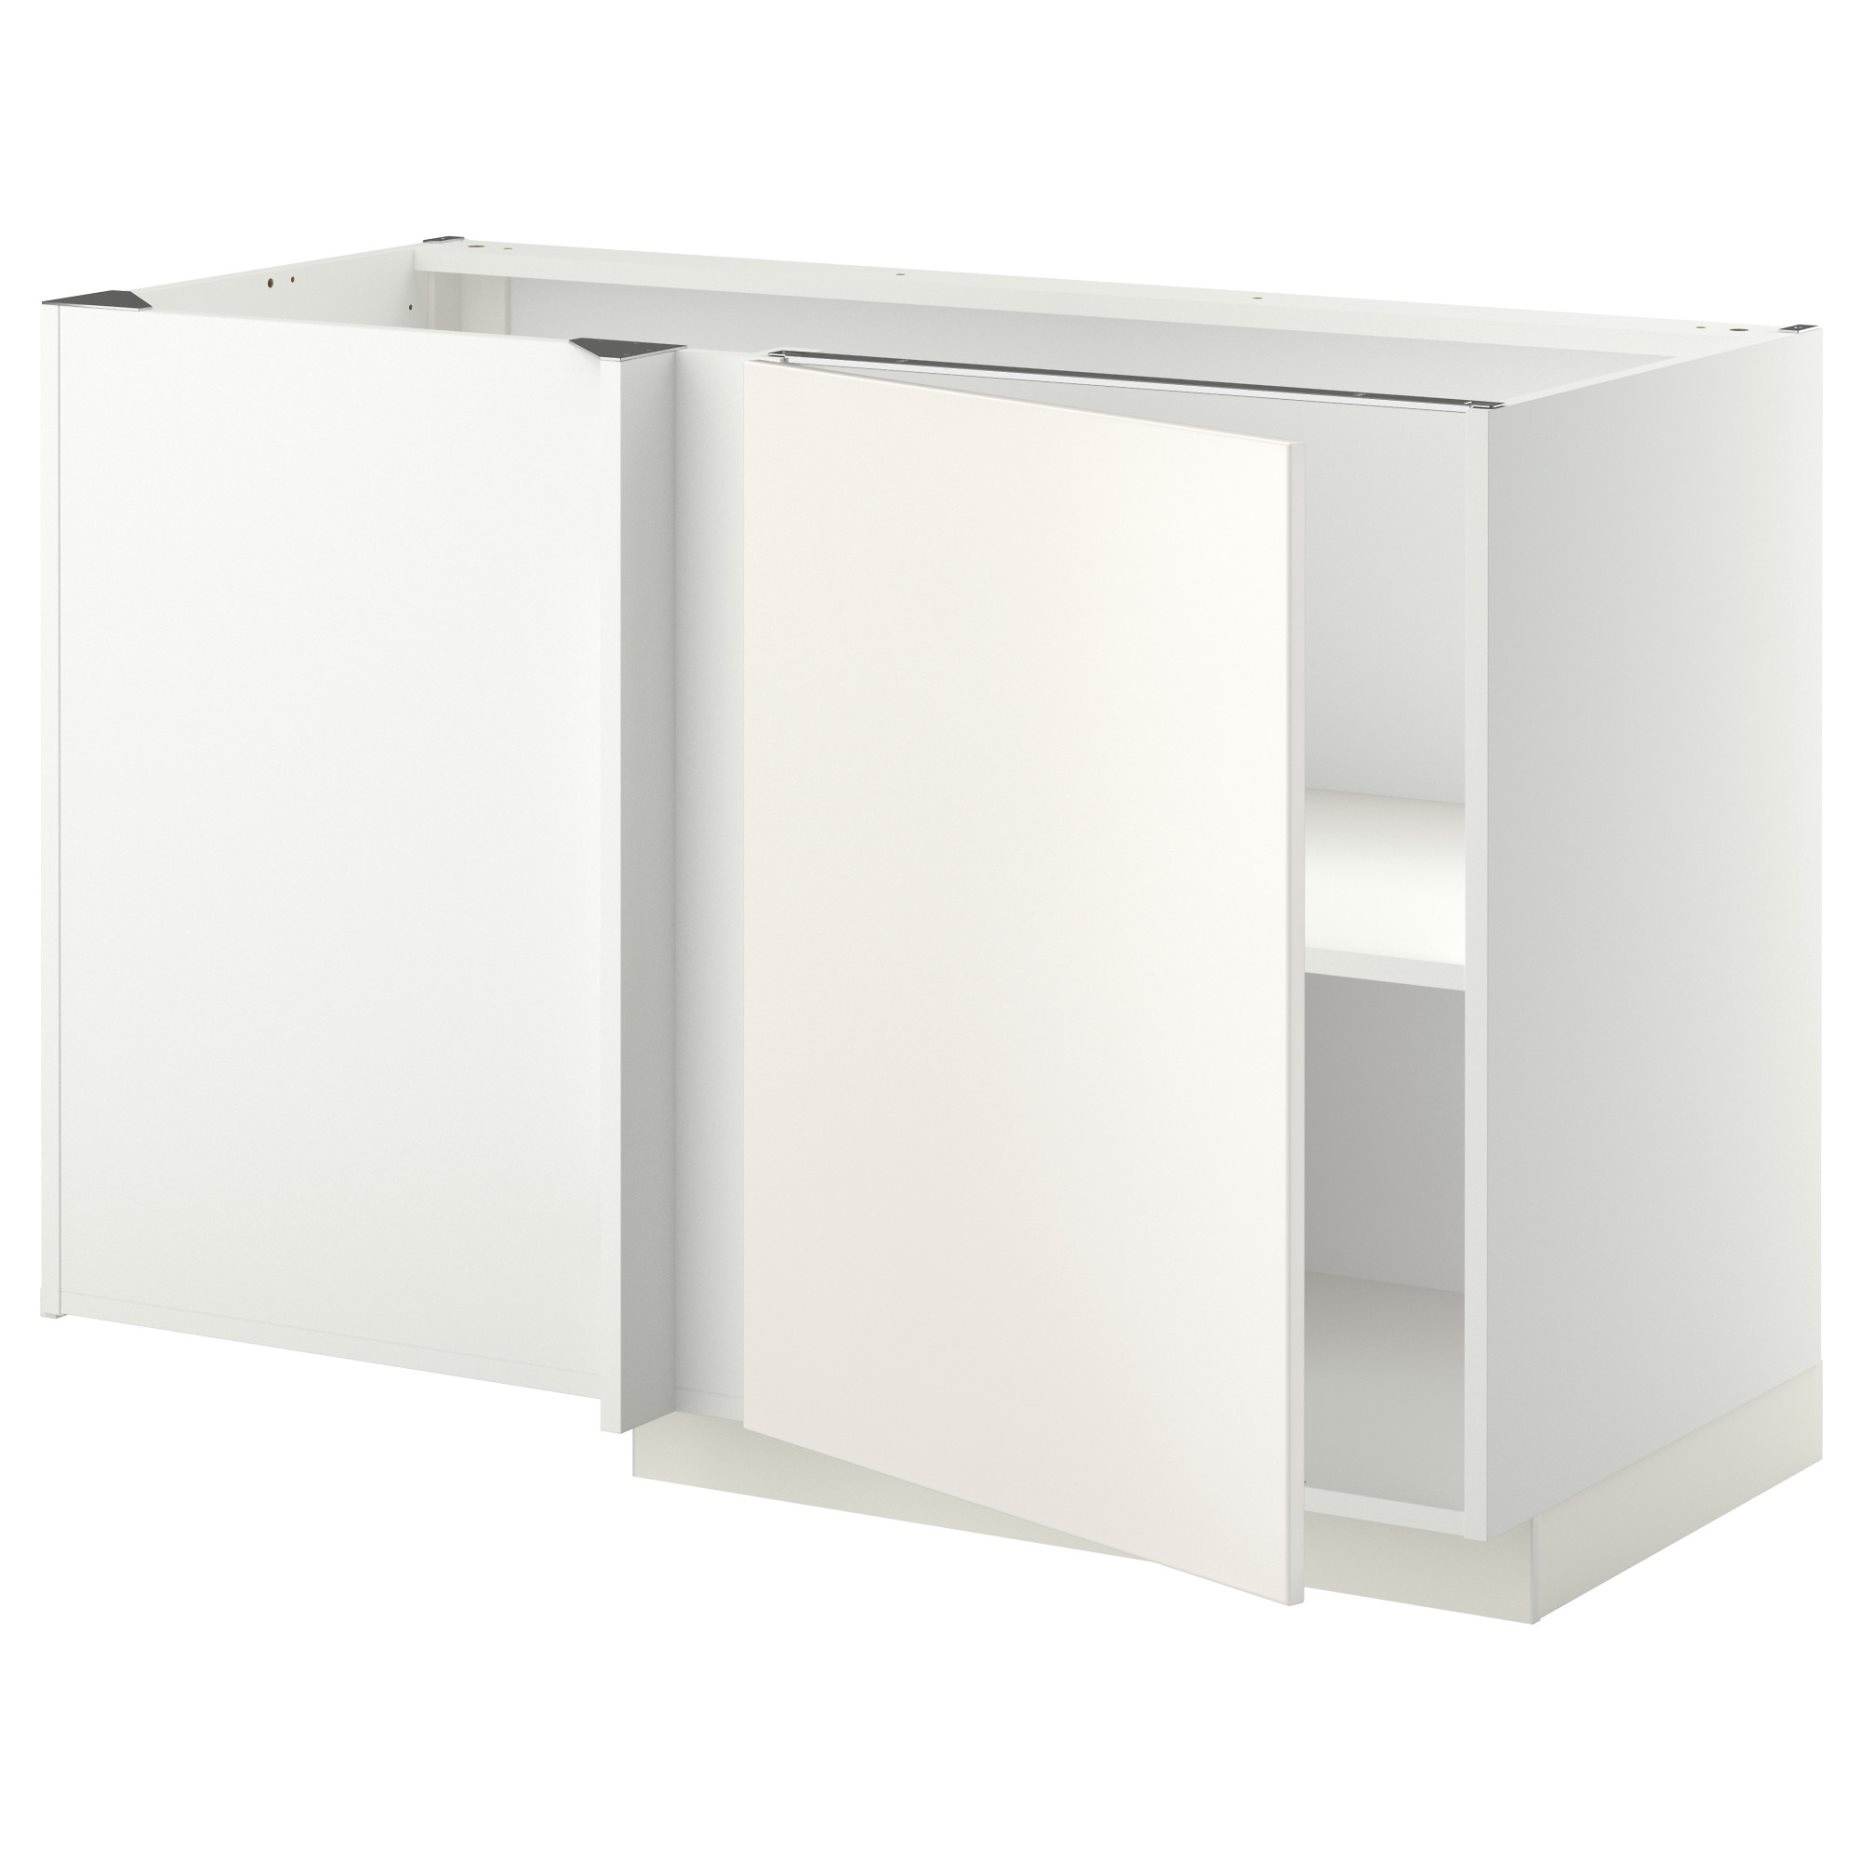 METOD, corner base cabinet with shelf, 128x68 cm, 794.589.01